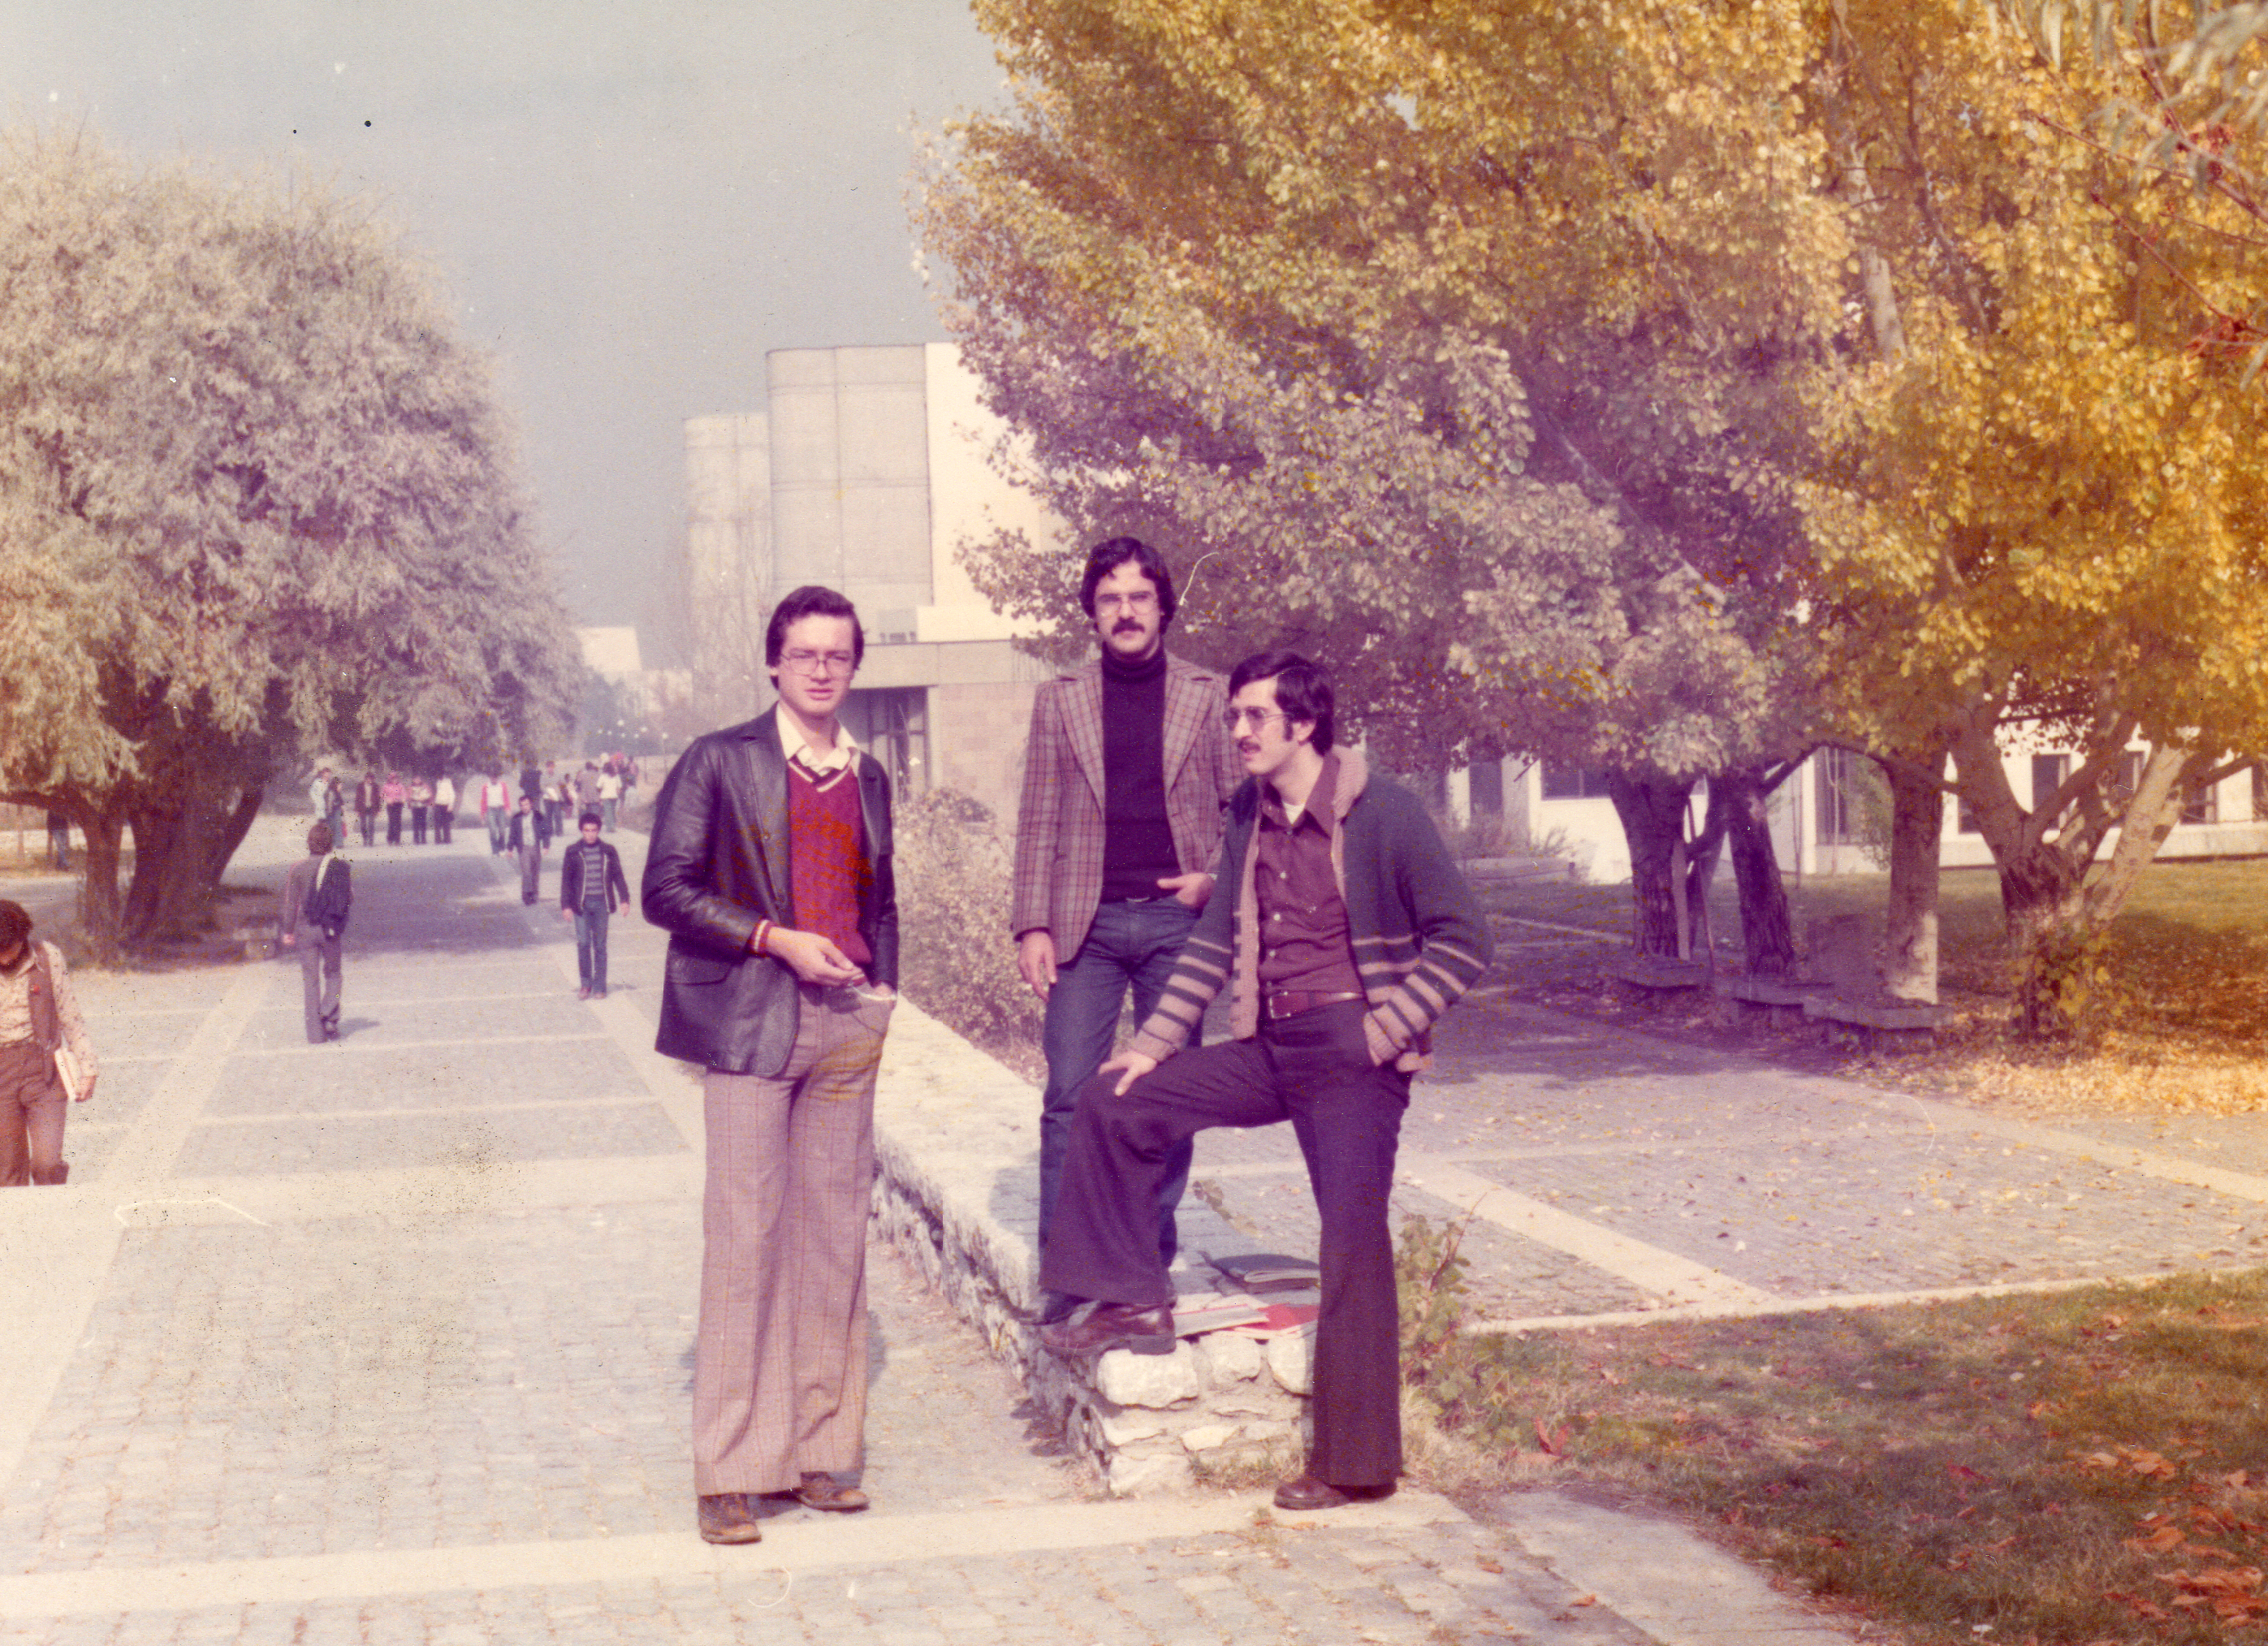 Autumn 1976, Güney Özcebe and his friends were on the street